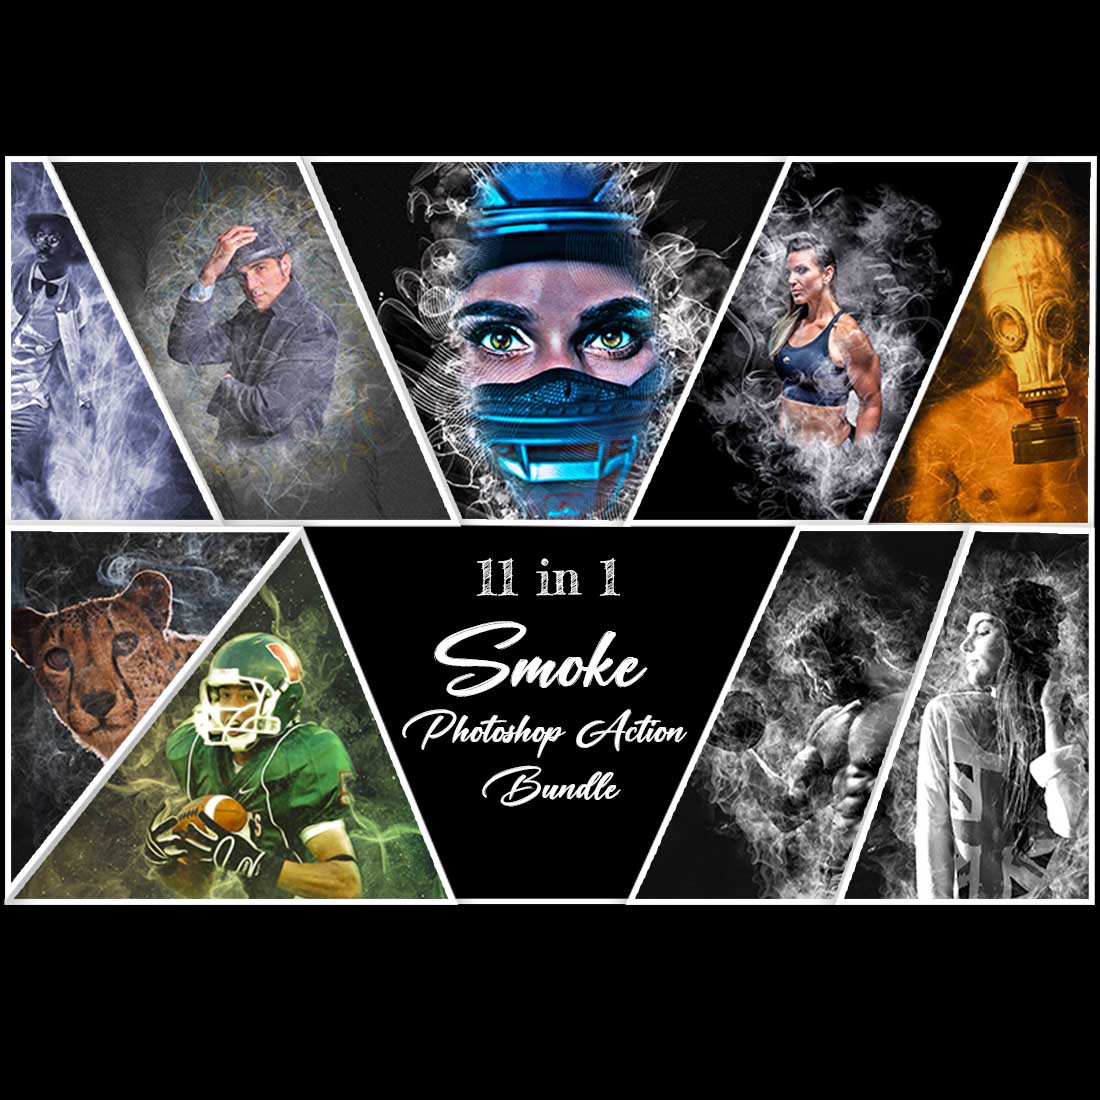 Smoke Photoshop Action Bundle cover image.